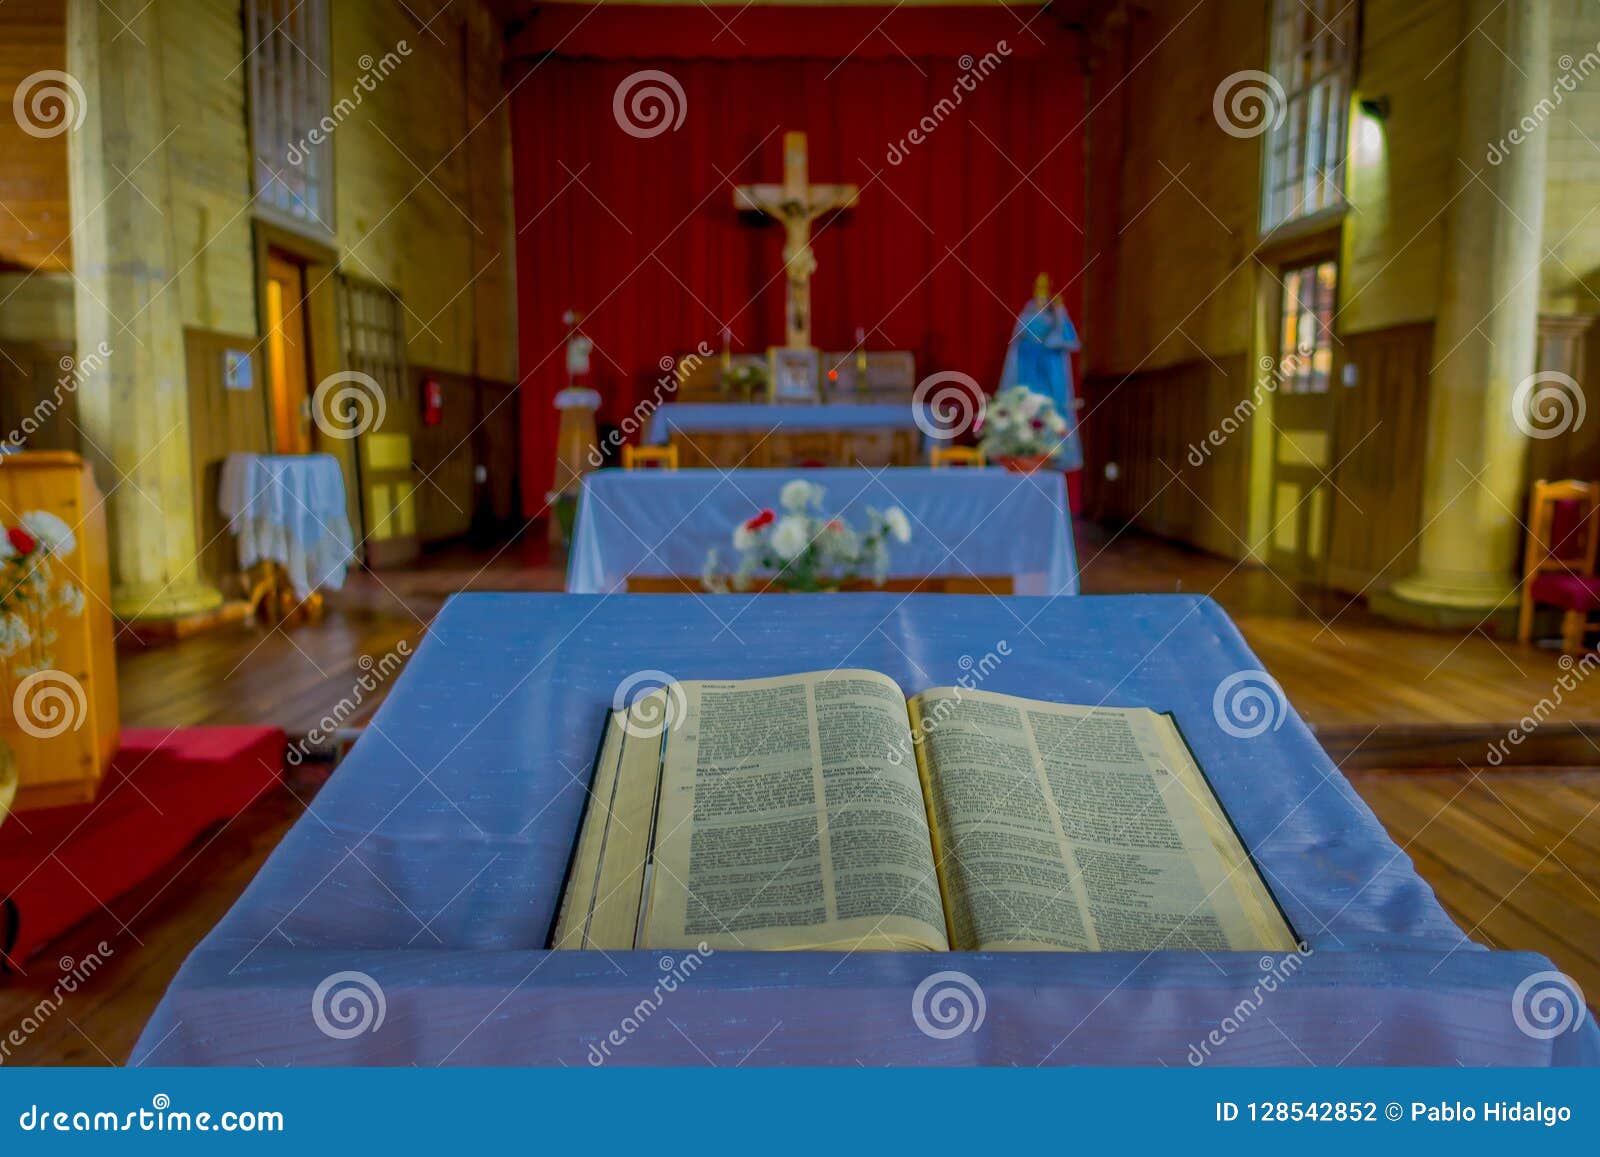 indoor view of wooden made church in chonchi, chiloe island in chile. nuestra senora del rosario